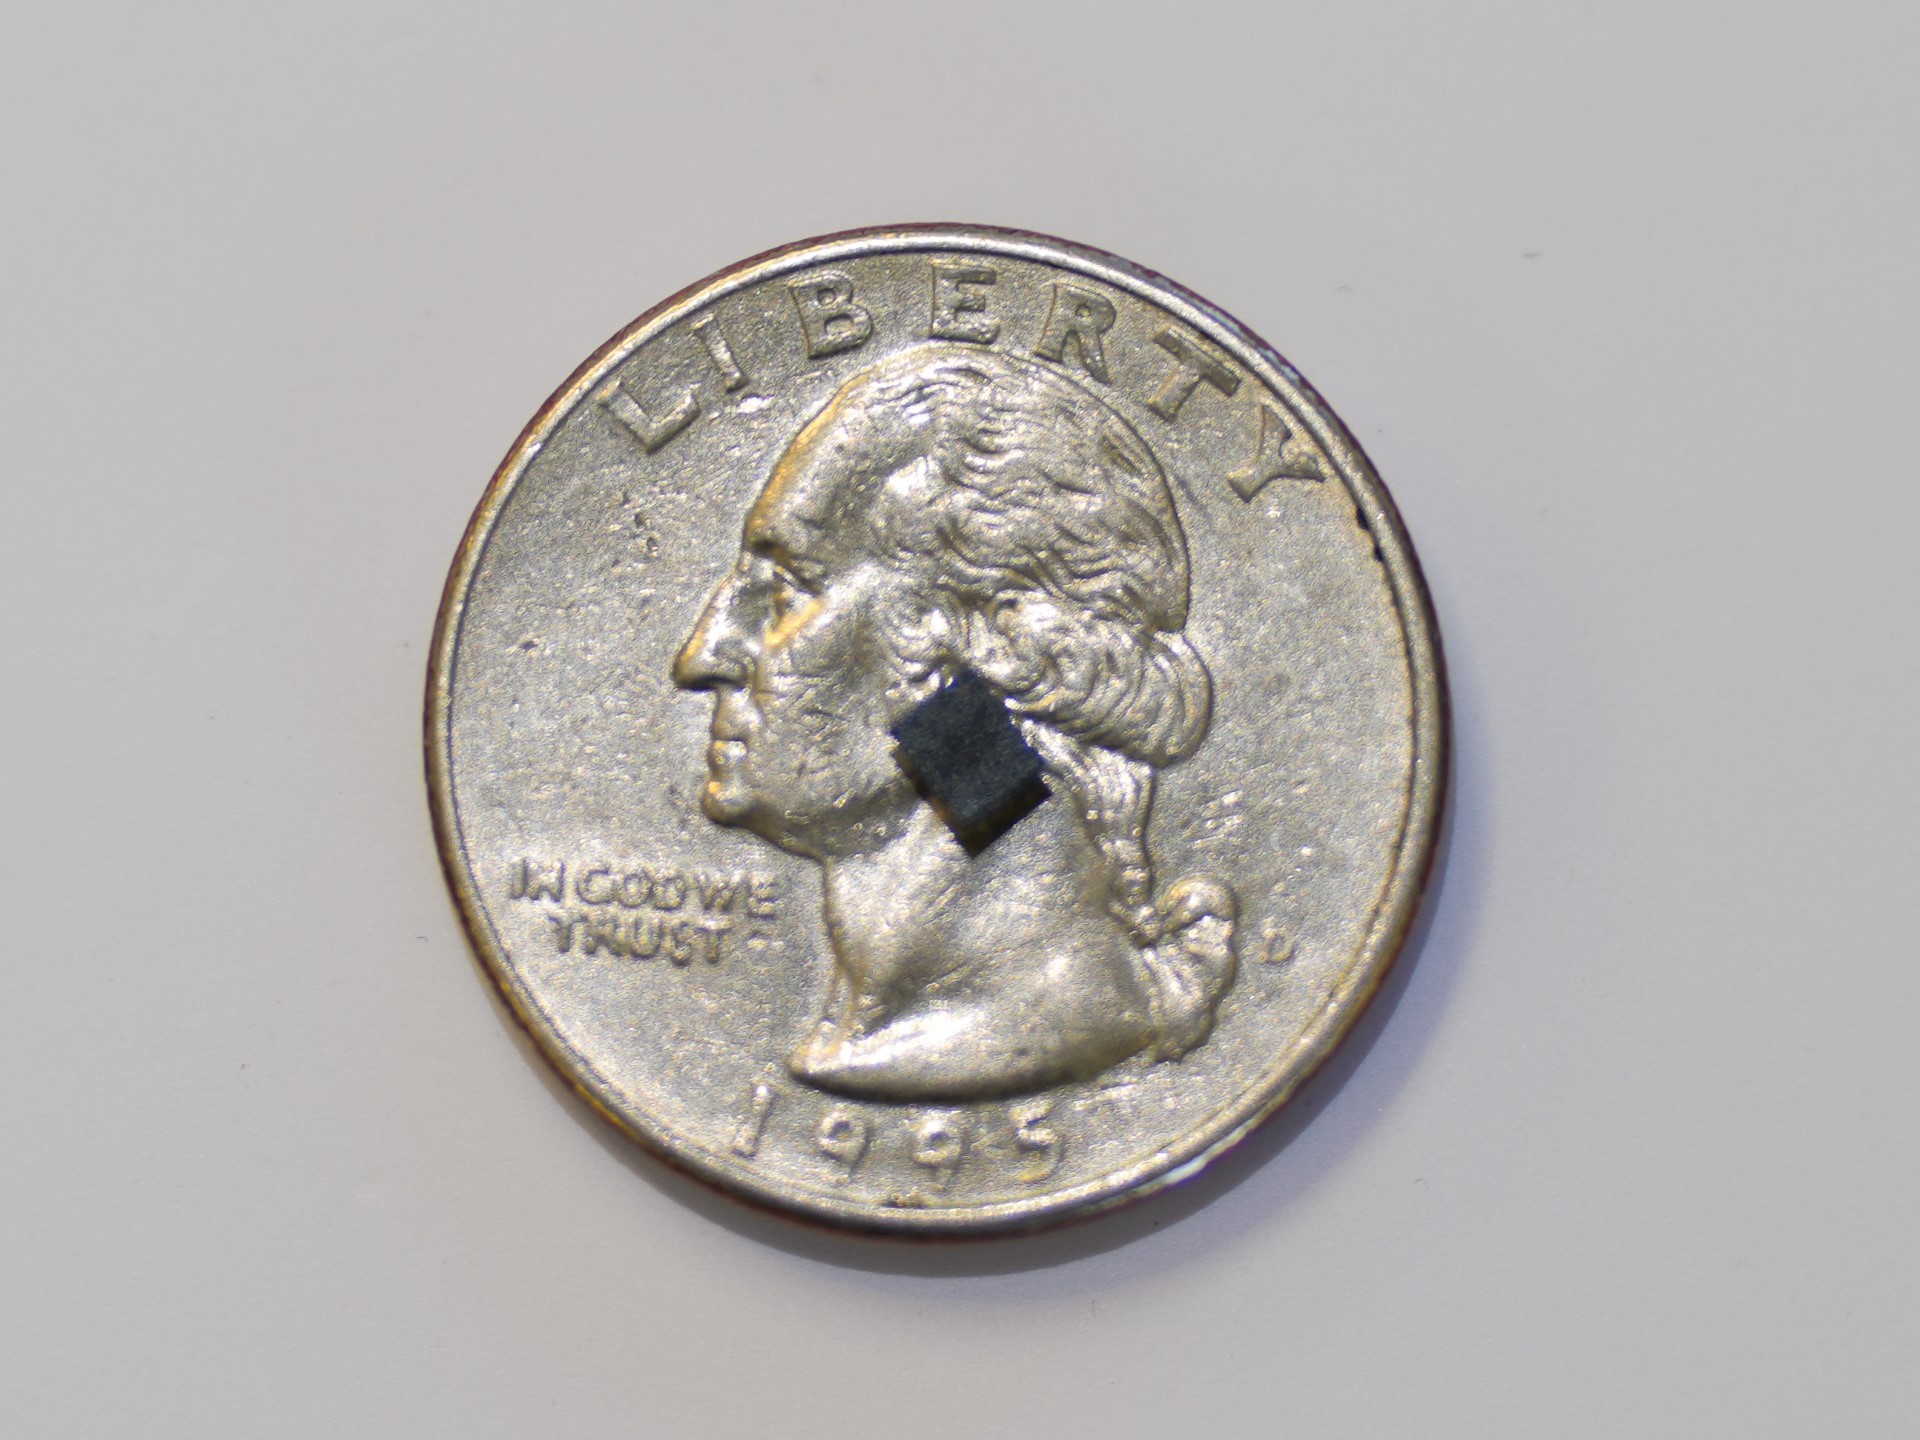 Quarter with a small rectangular sensor sitting on top